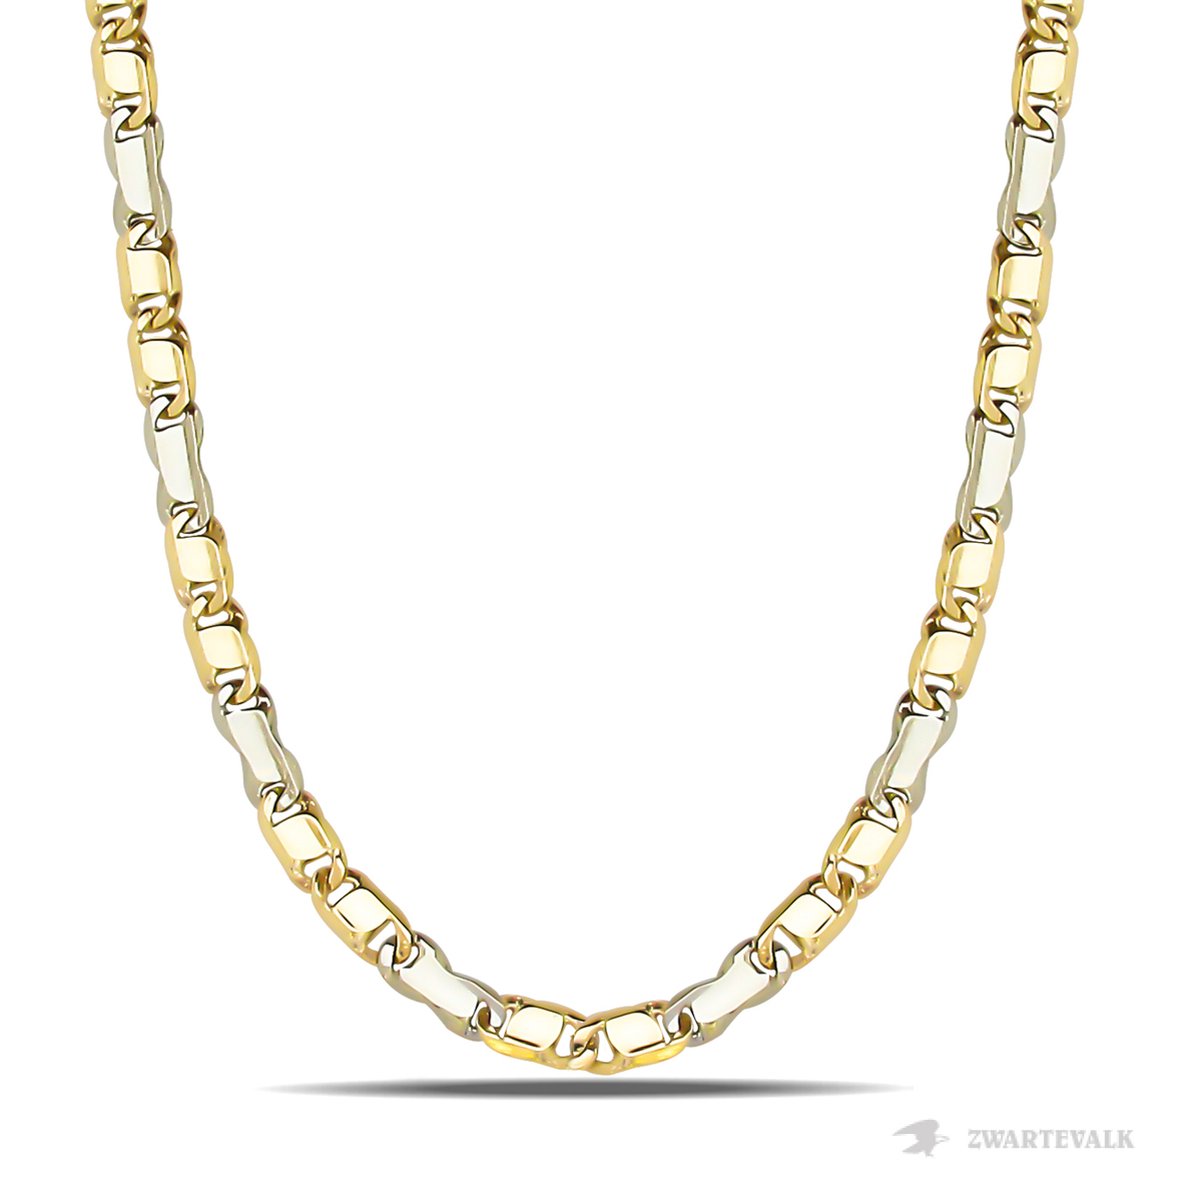 Juwelier Zwartevalk 14 karaat gouden bicolor ketting - BF 971/50cm